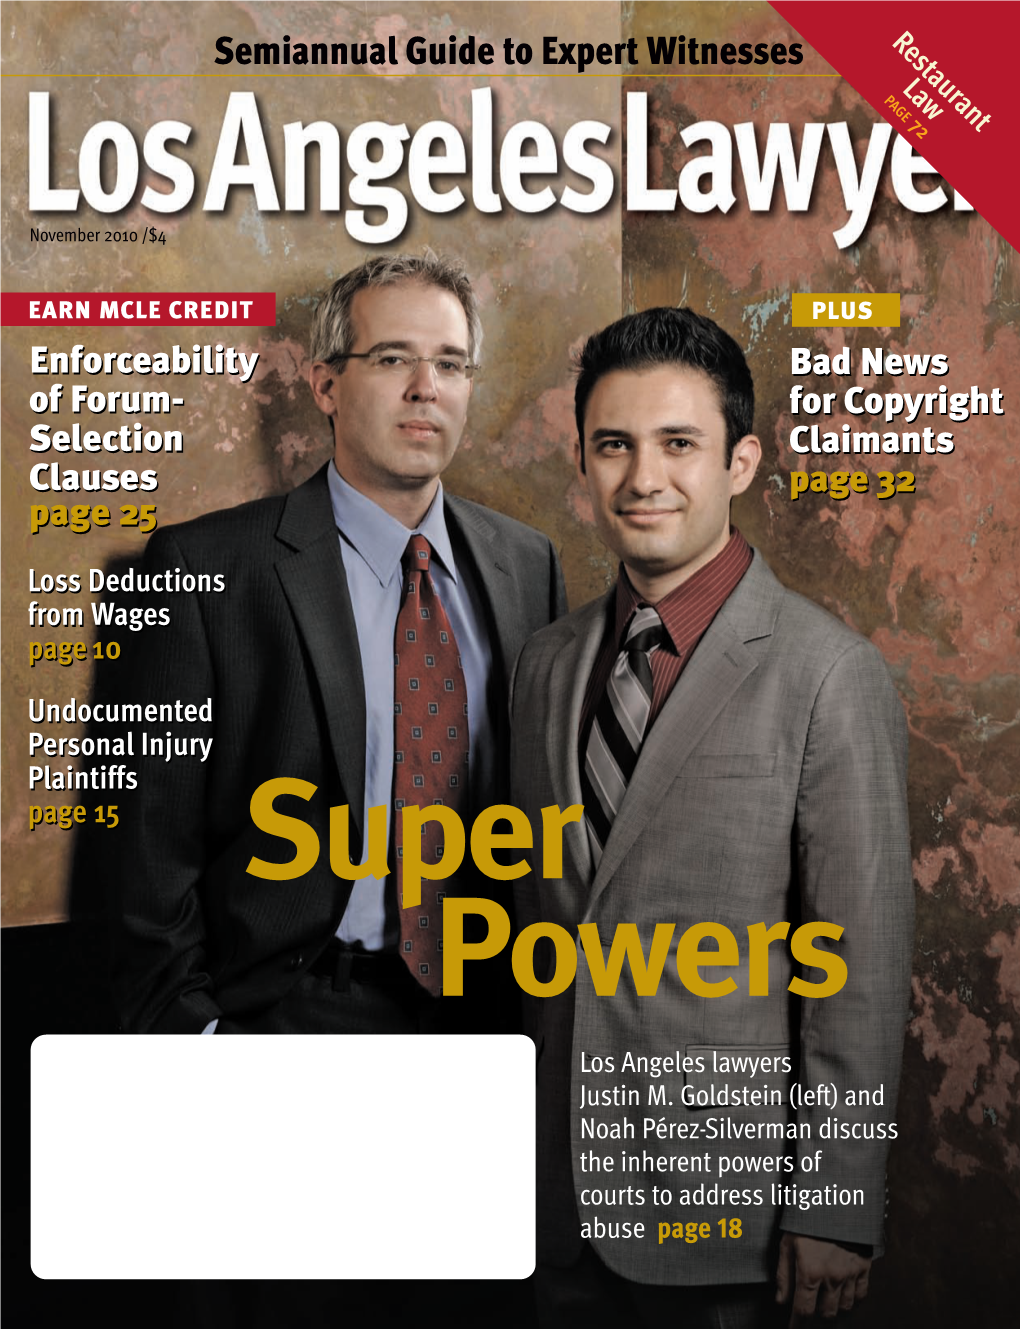 Los Angeles Lawyer November 2010 LOS ANGELES LAWYER__11 01 10__8.375X10.875__4C